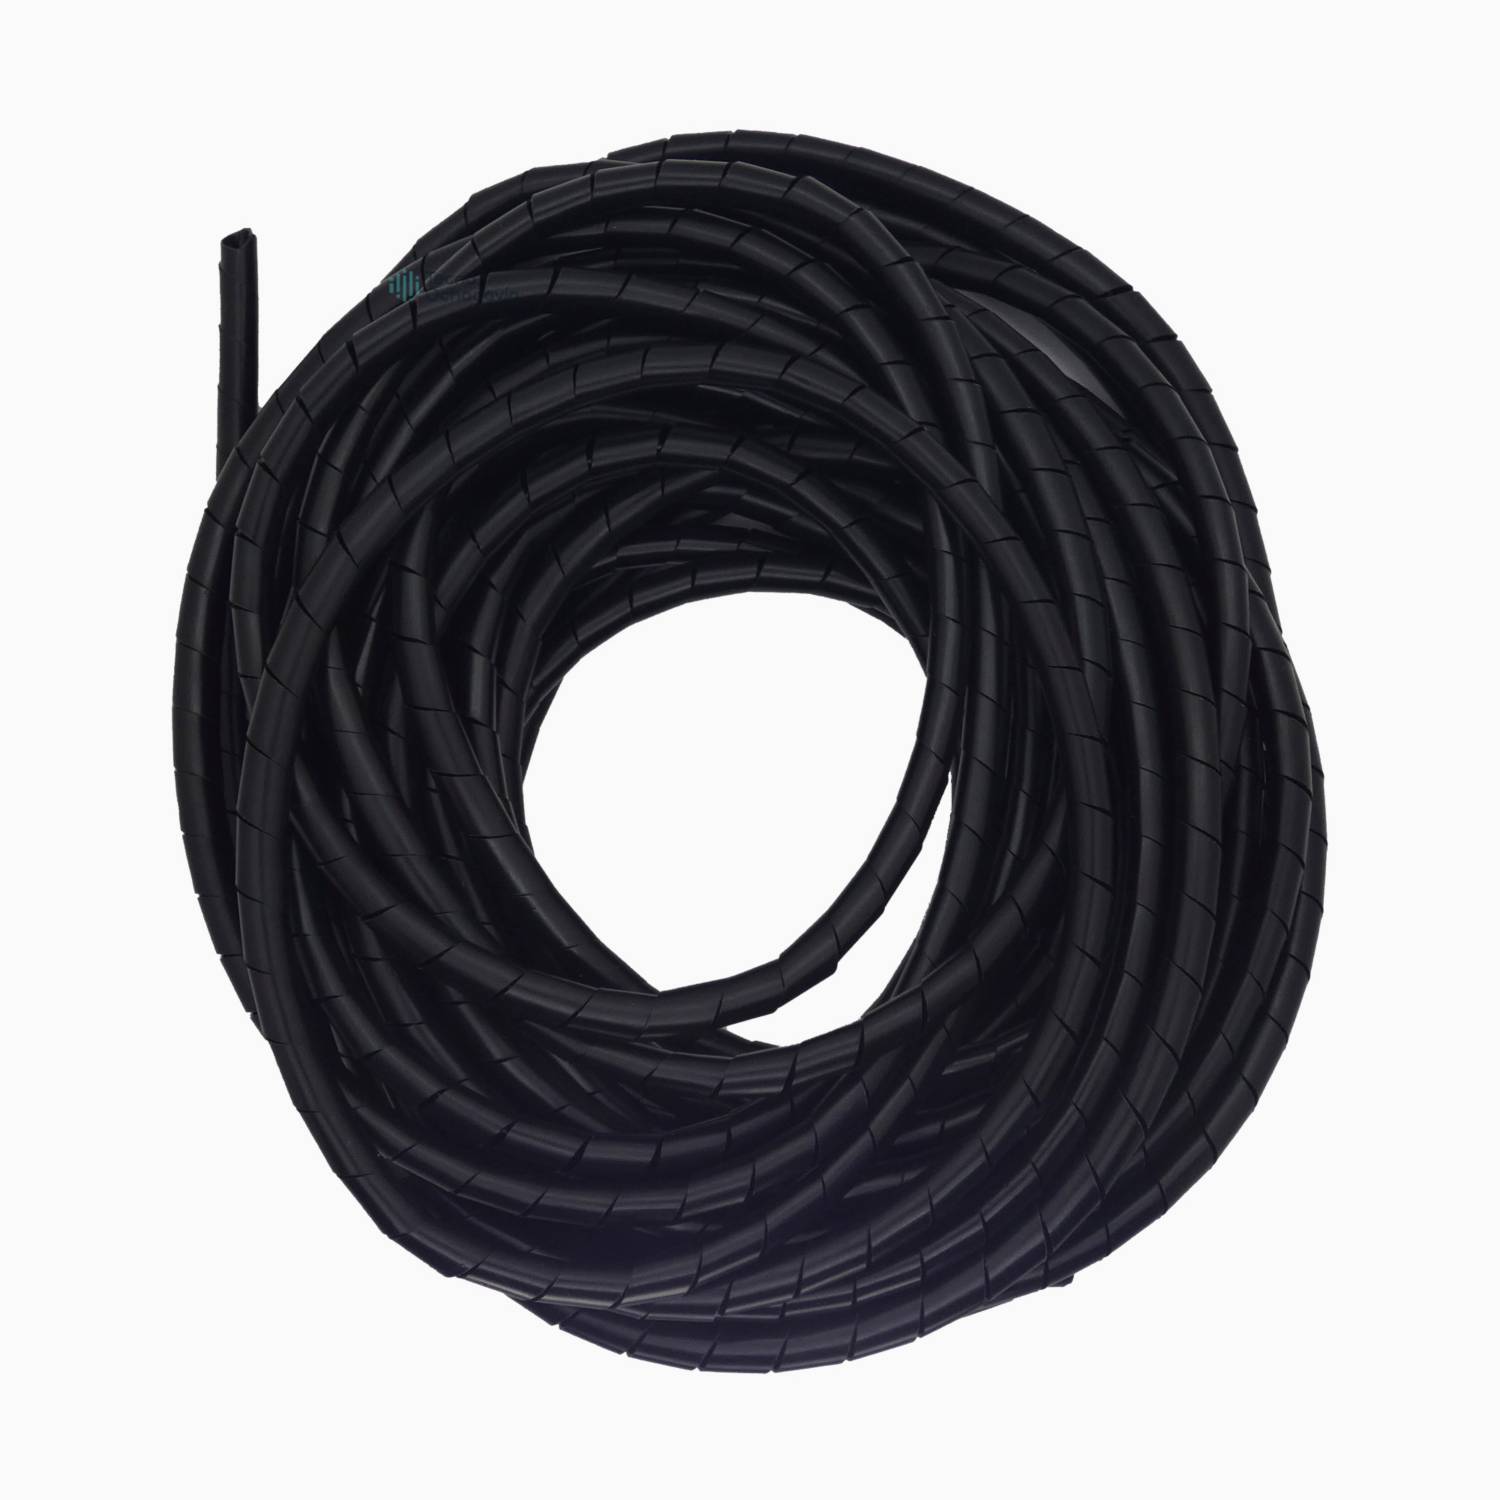 GENERICO Organizador / Ordena Cable En Espiral negro - 6mm - 10 Mts